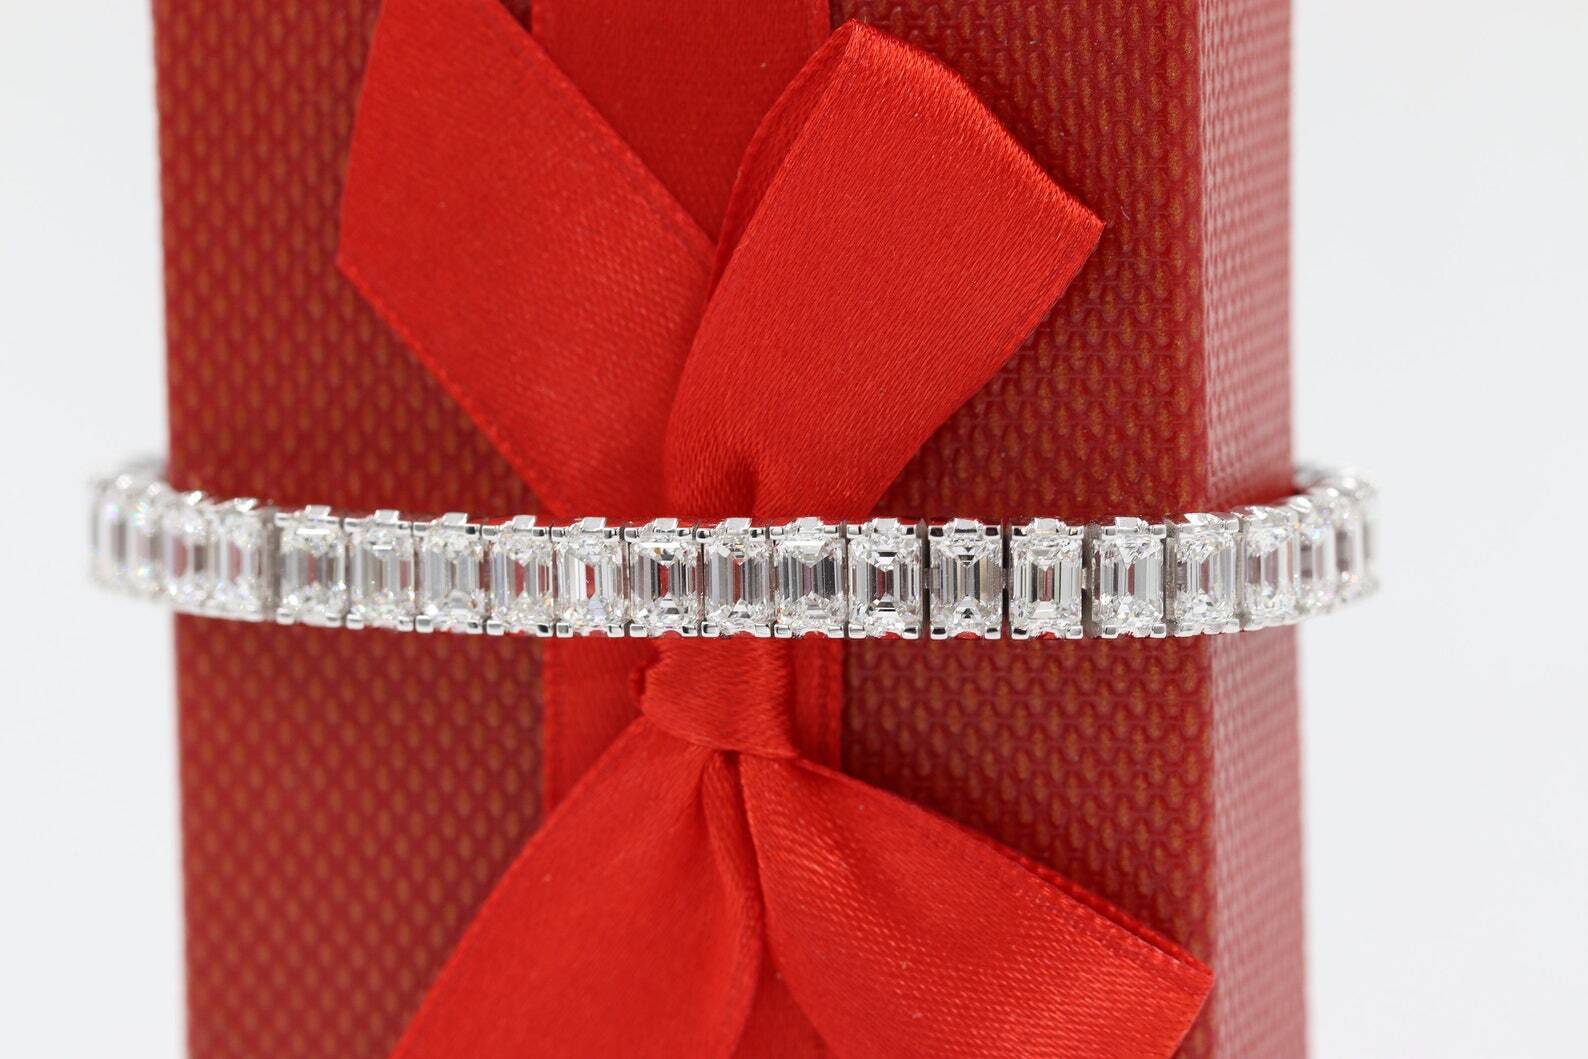 STUNNING 10.00ct Natural Emerald Cut Diamond Tennis Bracelet , 18k white gold - £35000 NRV - Image 5 of 5